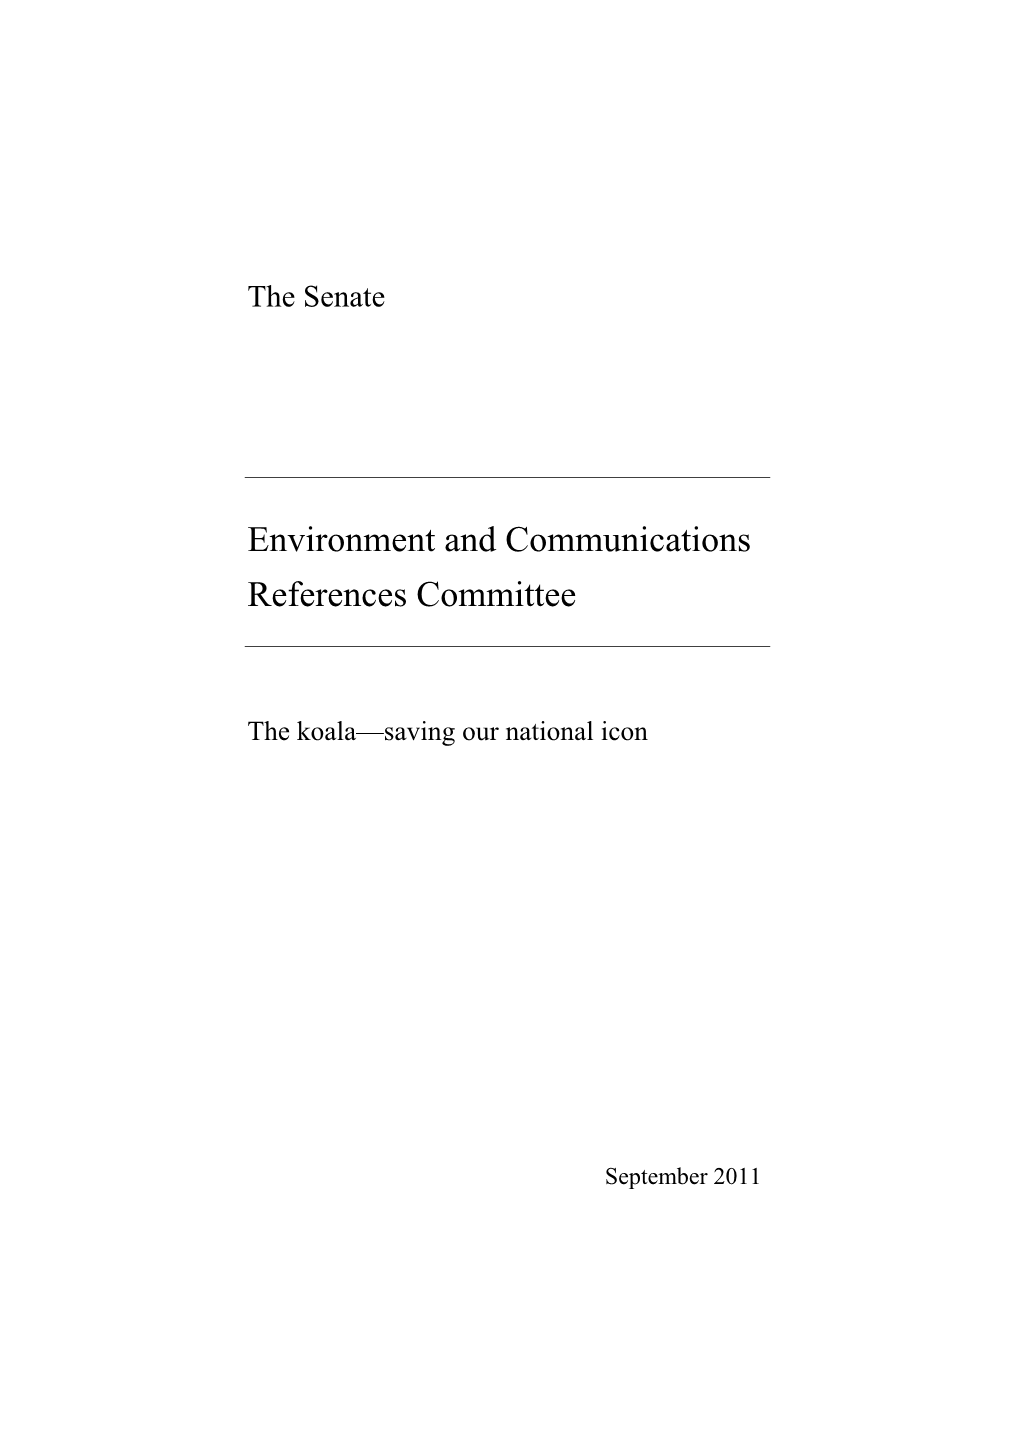 2011 Senate Report